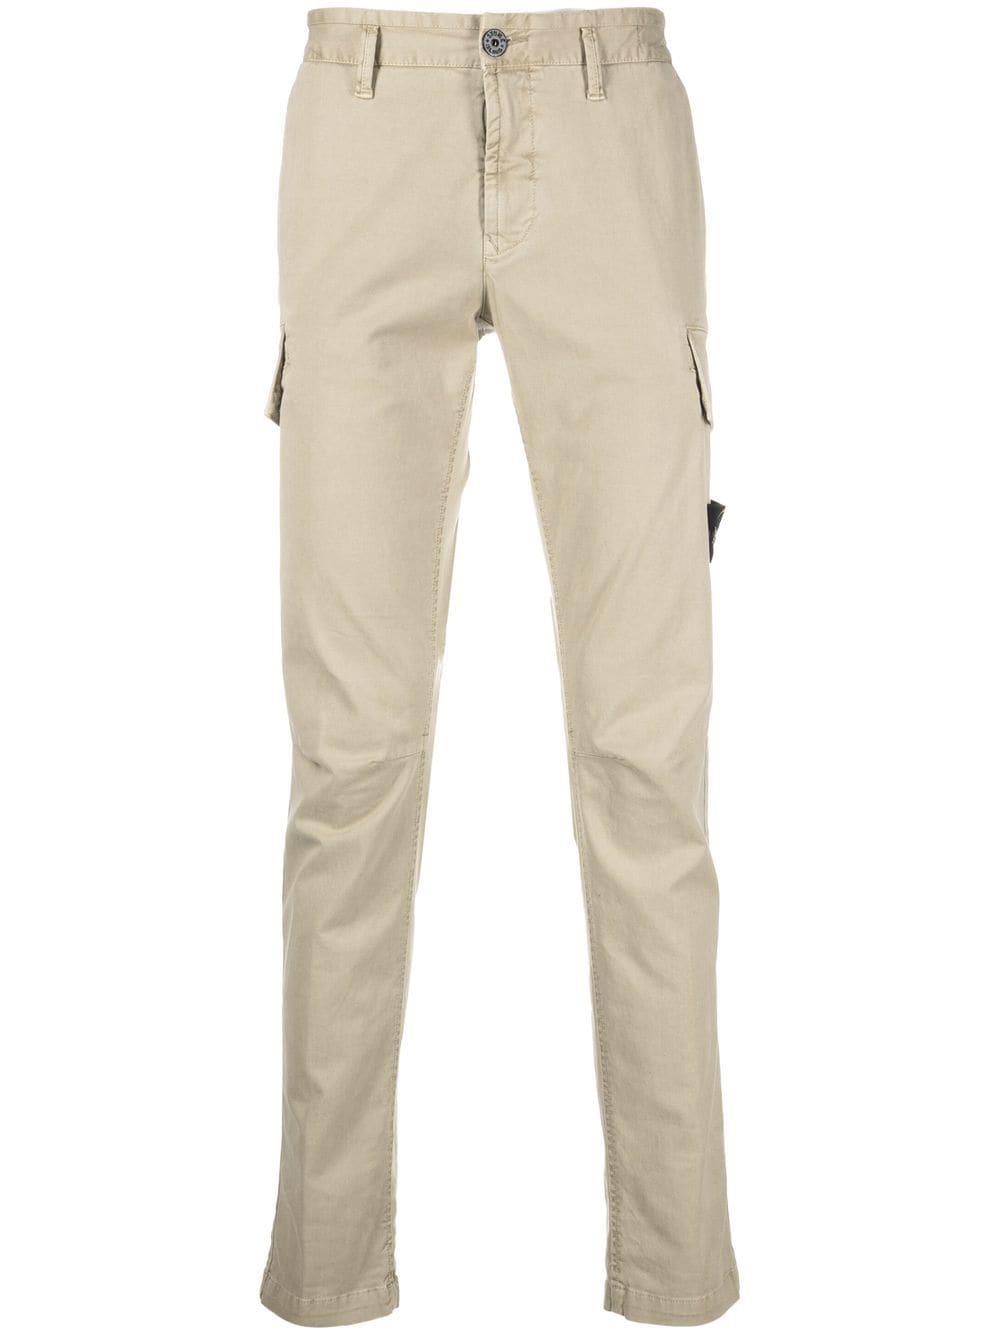 Stone Island Pantalon cargo beige T.CO+OLD - Lothaire boutiques